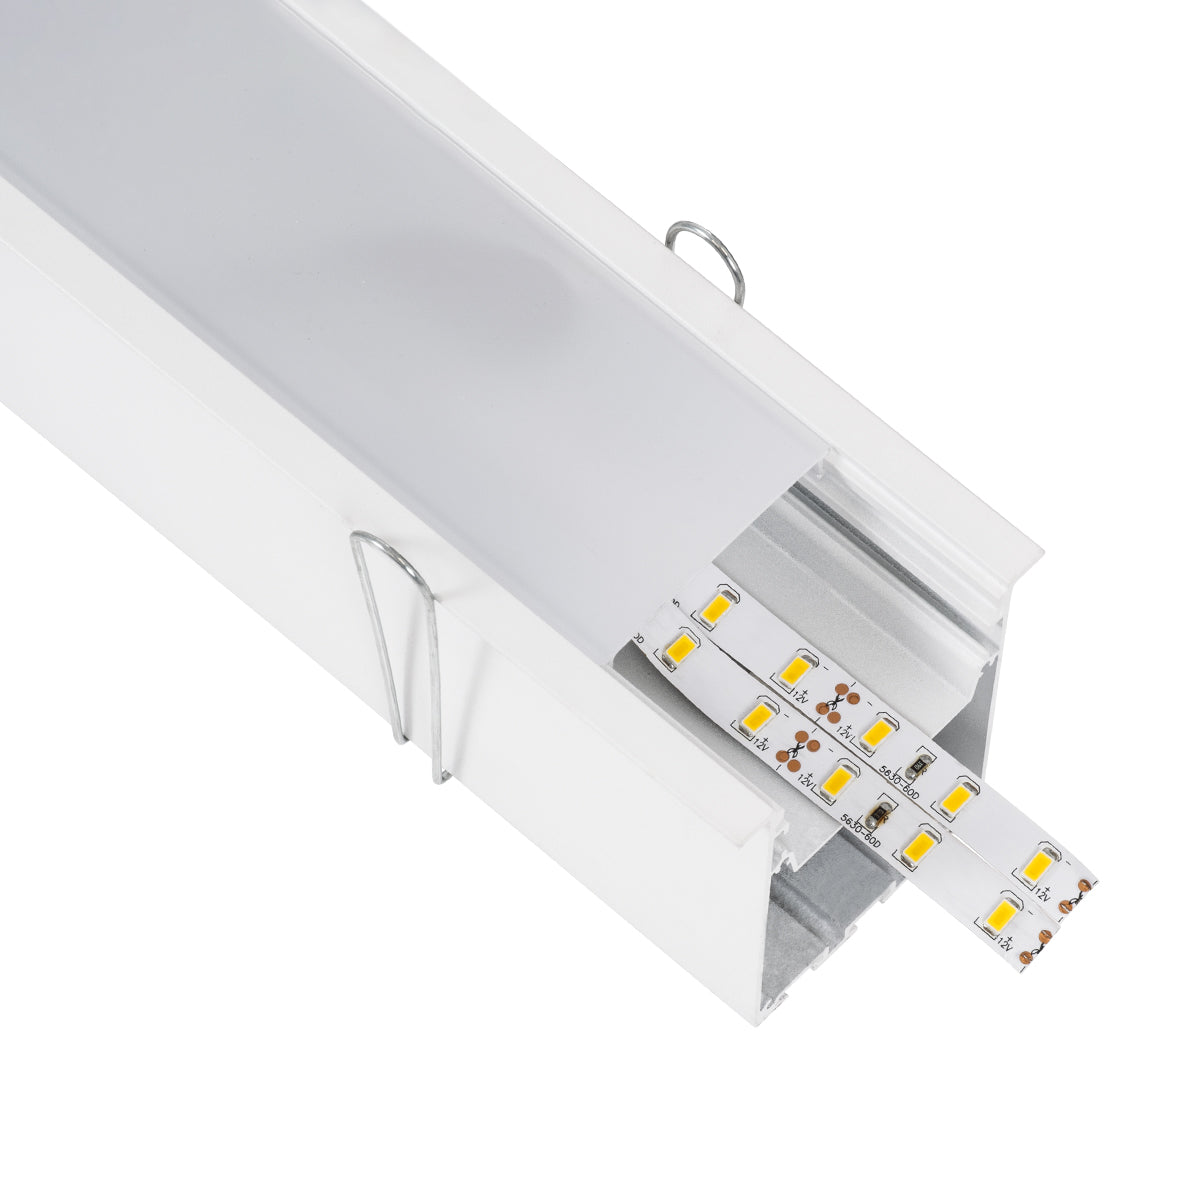 GloboStar® 70833-3M AVATAR Linear Γραμμικό Αρχιτεκτονικό Χωνευτό Προφίλ Αλουμινίου Λευκό με Λευκό Οπάλ Κάλυμμα για 4 Σειρές Ταινίας LED Πατητό - Press On 3 Μέτρα